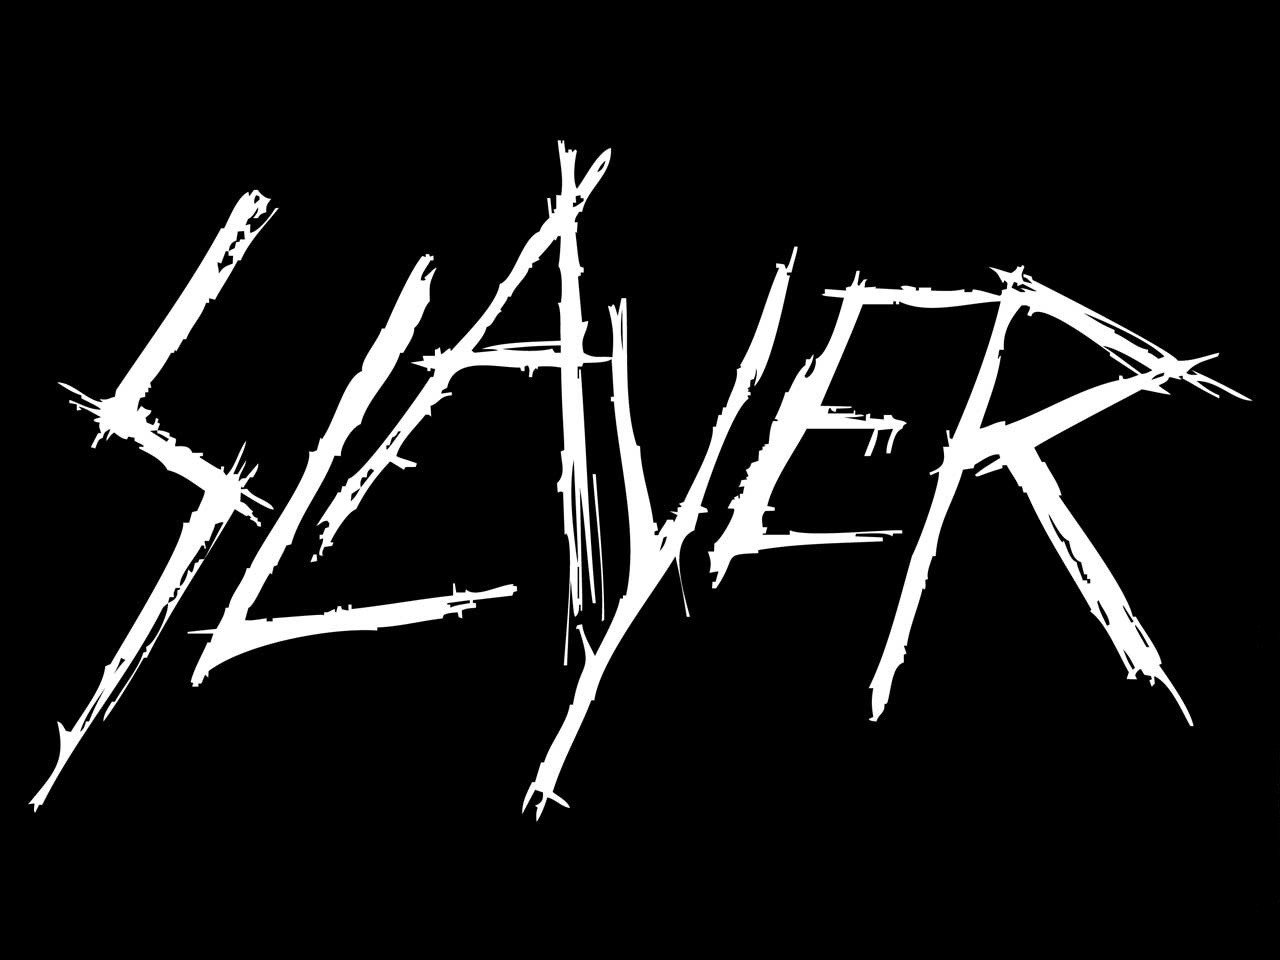 Wallpaper, 1280x960 px, metal band, Slayer, thrash metal 1280x960